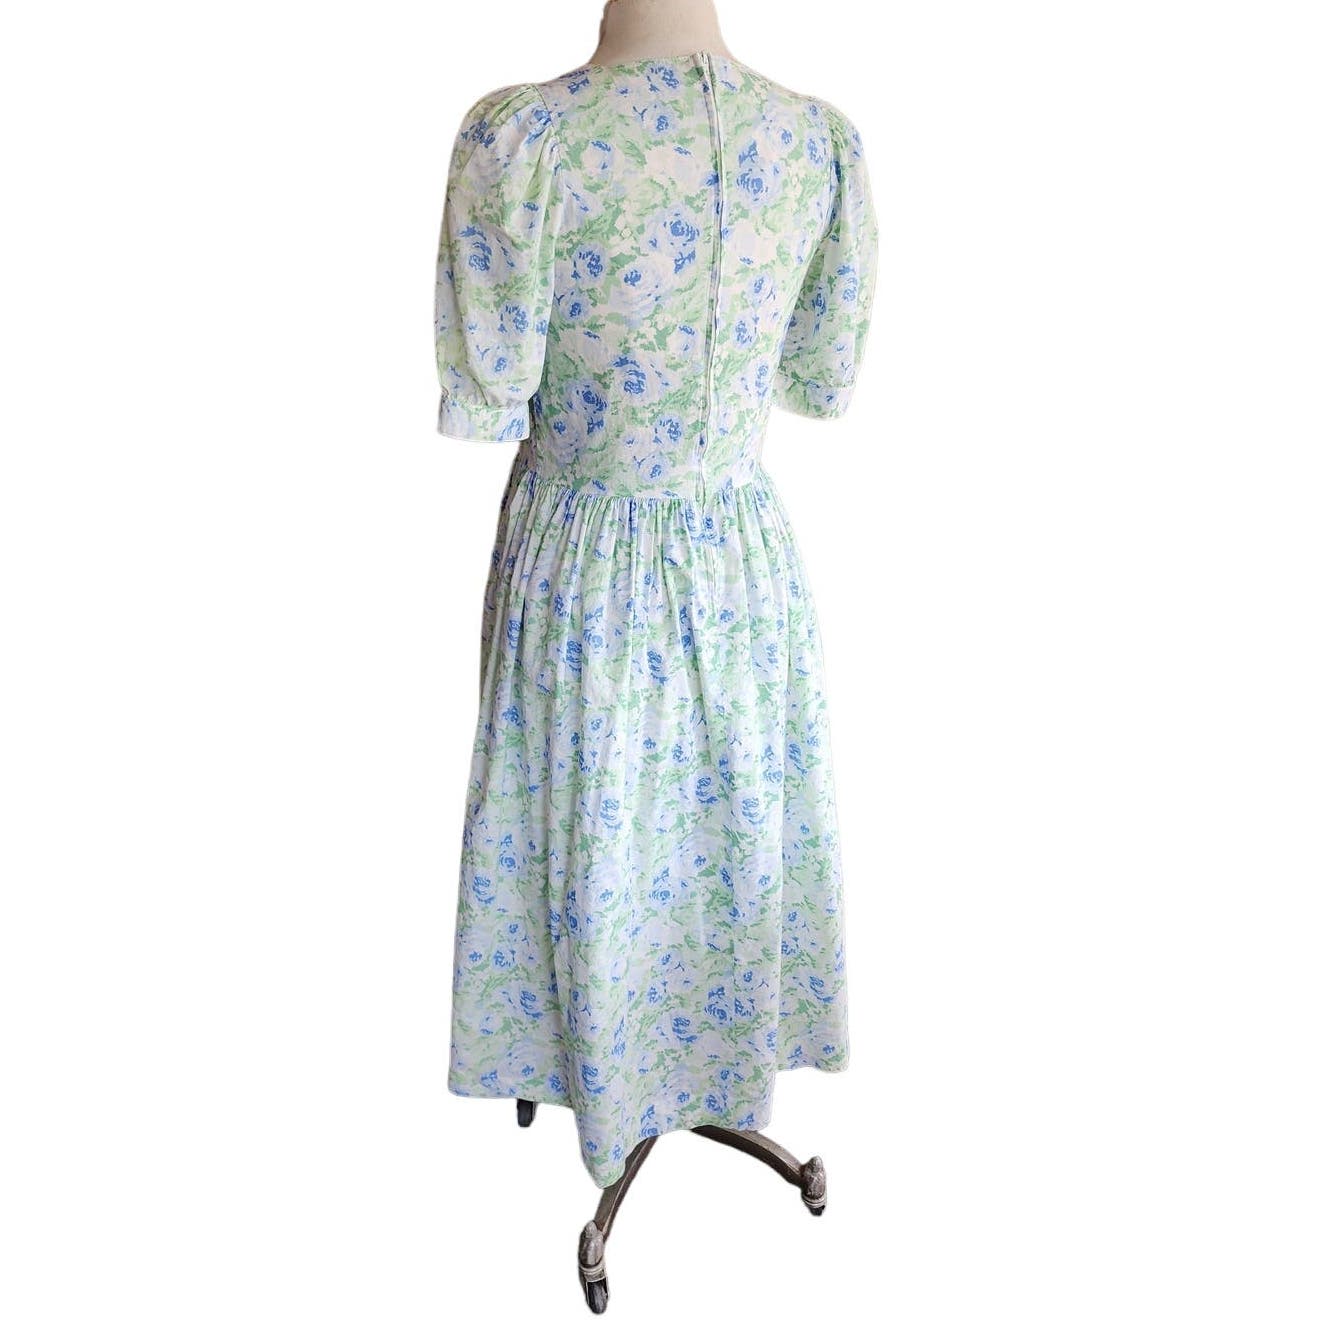 Vintage 80s Laura Ashley Floral Print Dress Blue Green White Cotton